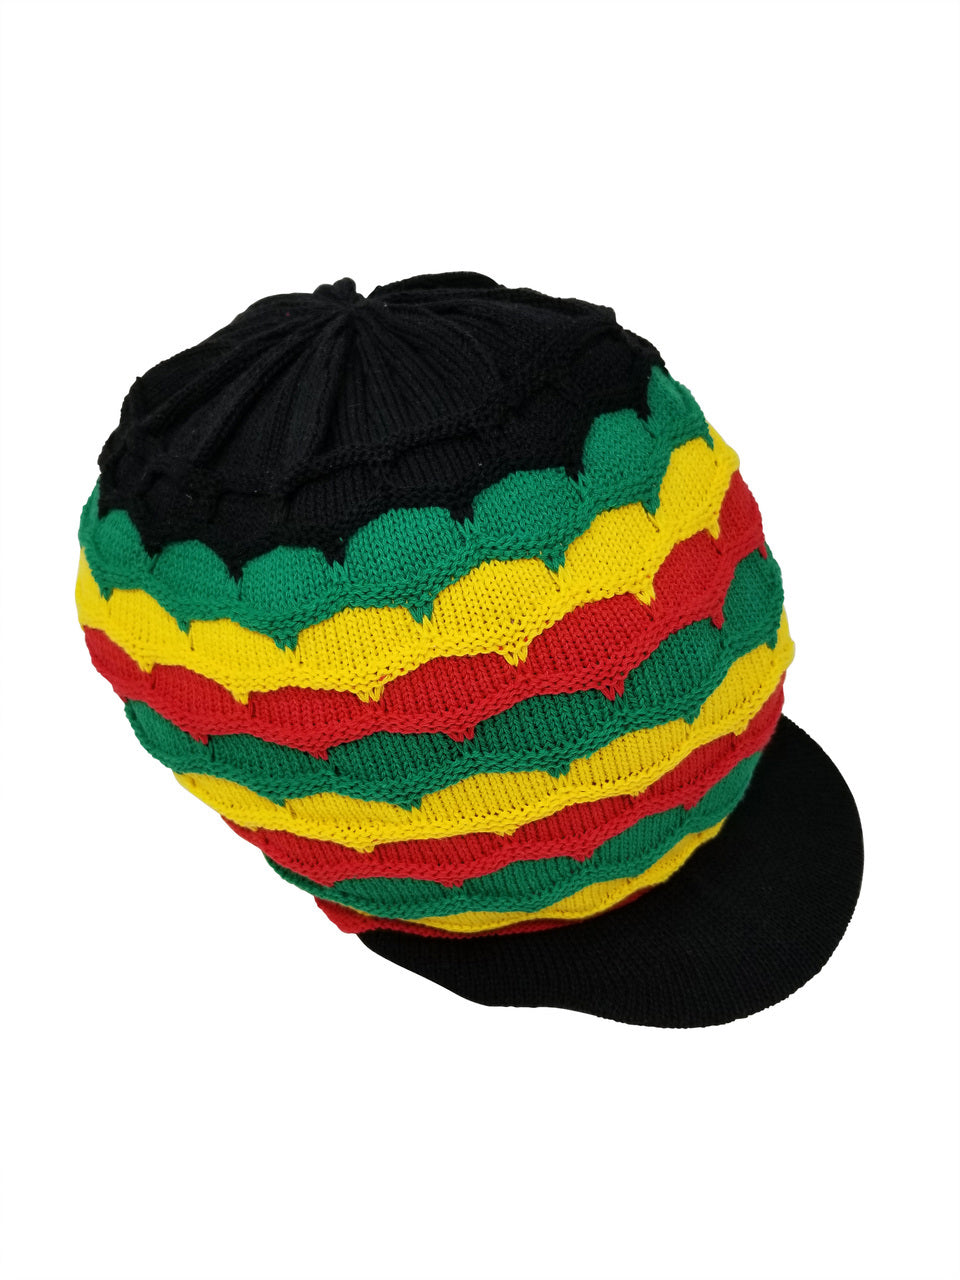 RH020-4 Medium Rastafarian Crowns AKA rasta hats tams dread locks cap - Black - White